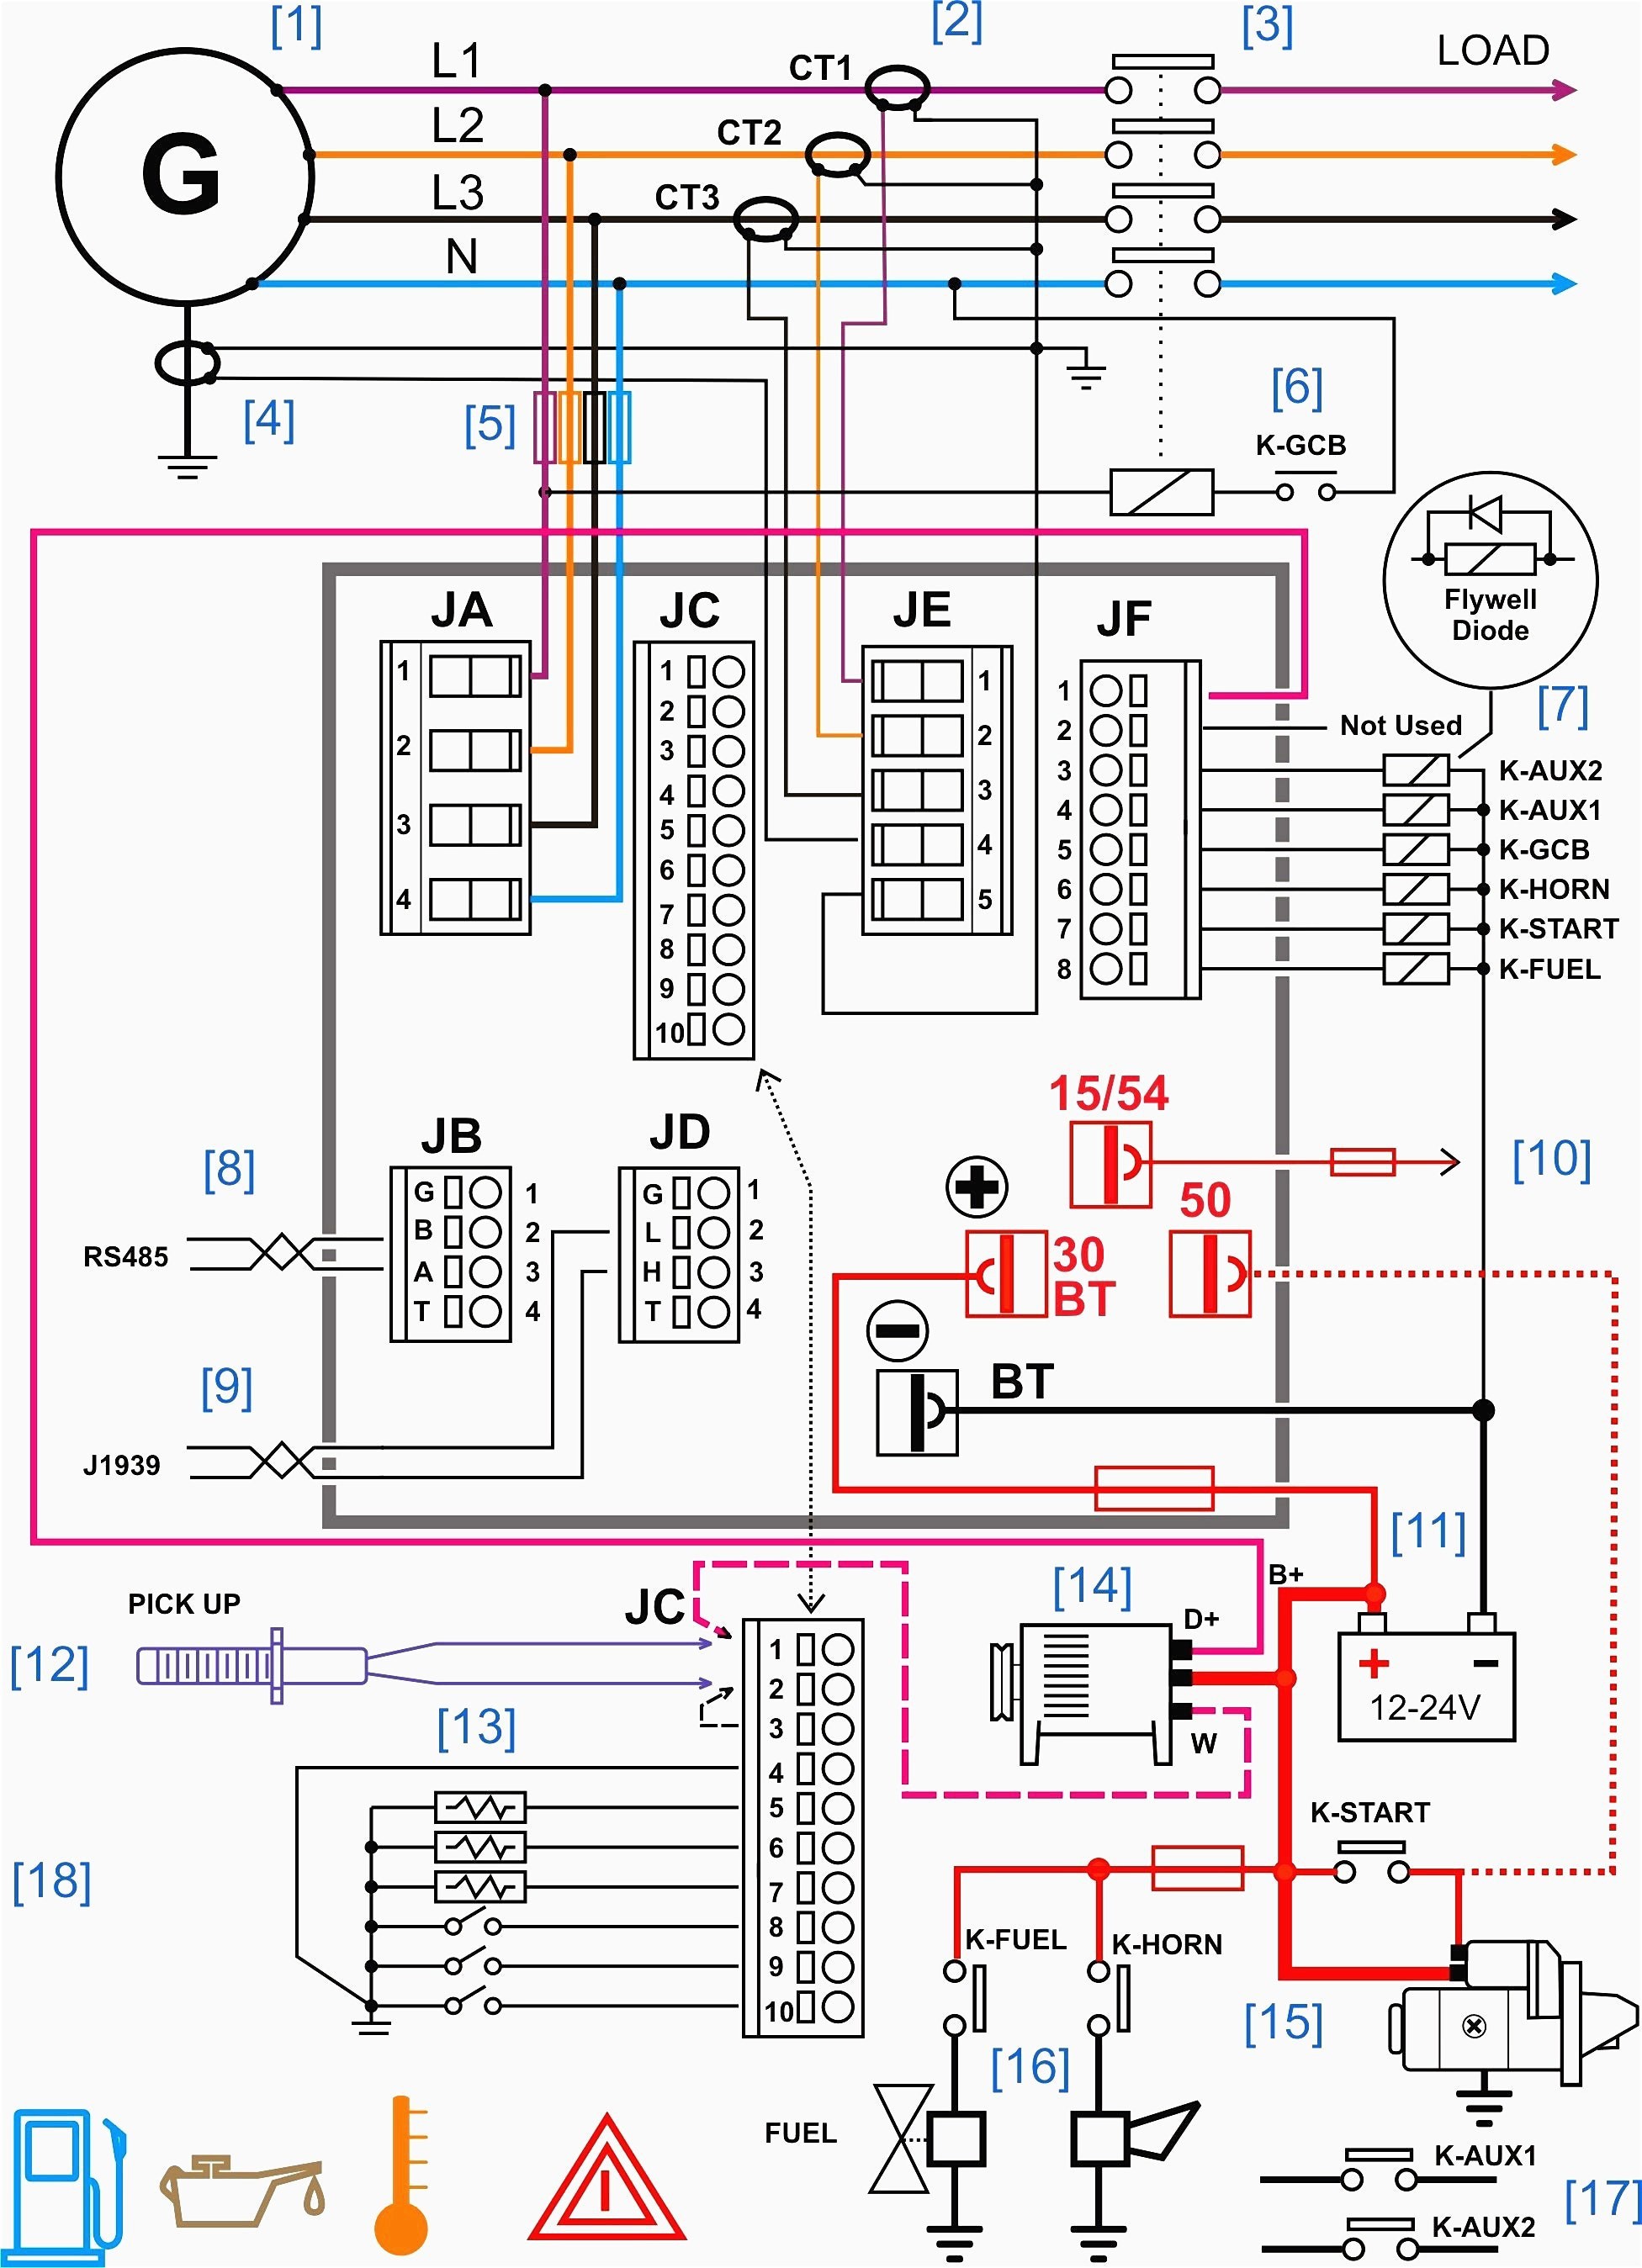 Free Wiring Diagram Software & Free Wiring Diagram Software Amusing Guide Symbols Size Electrical Drawing Uk